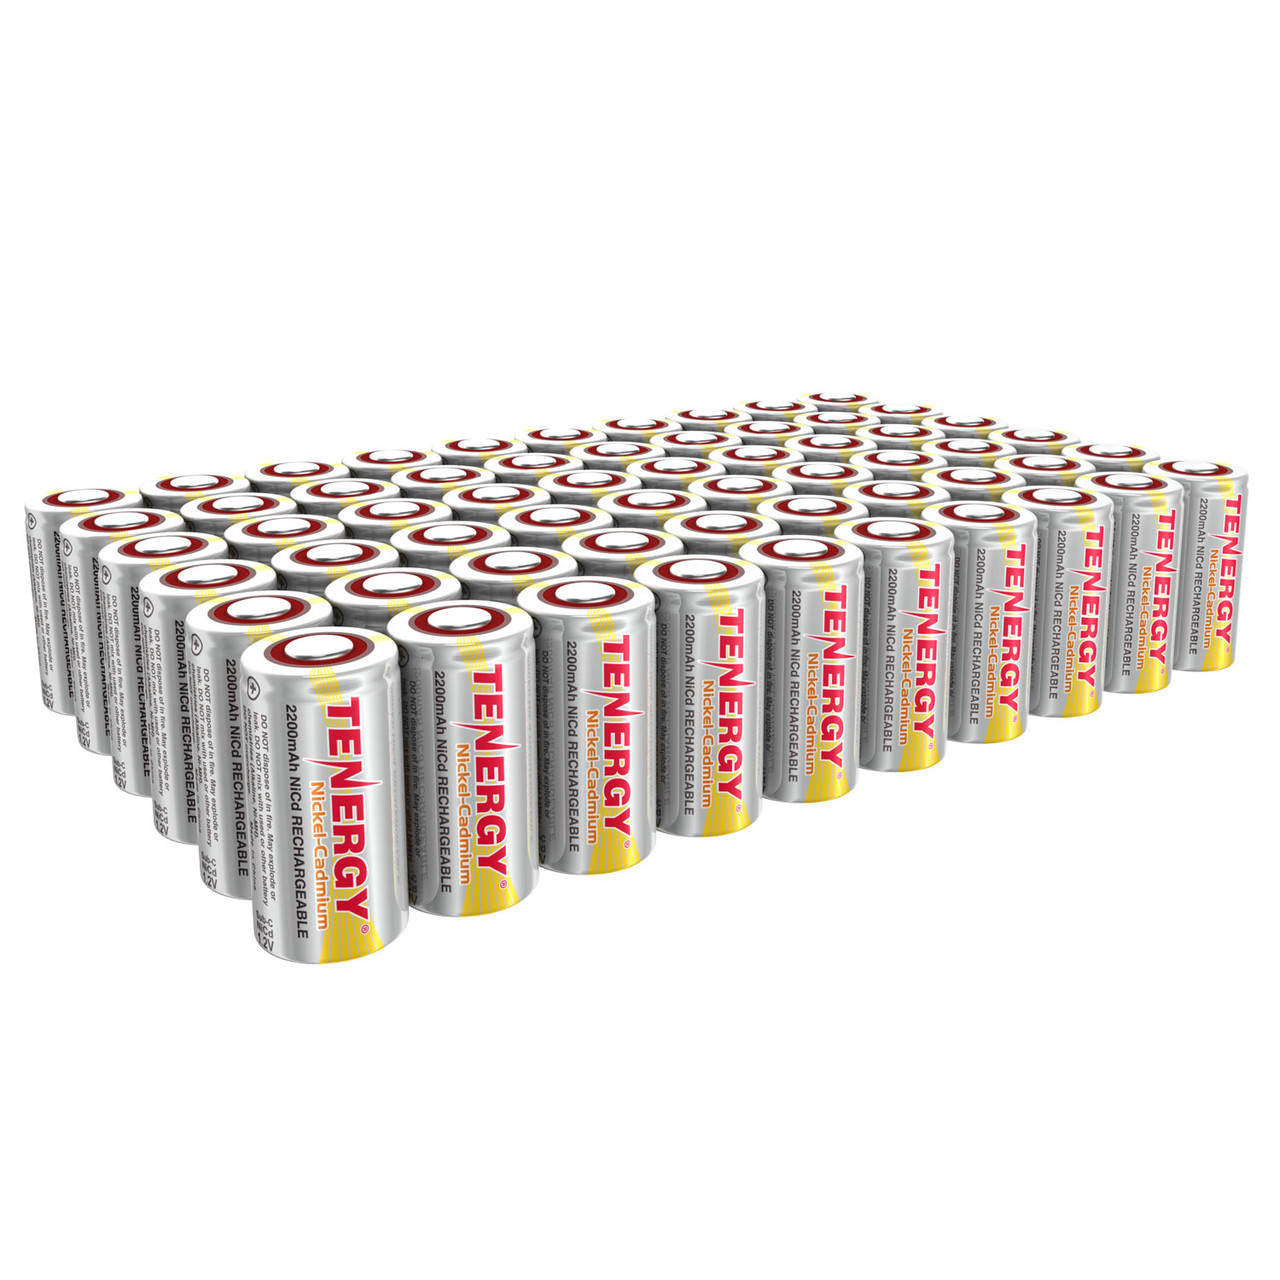 COMBO: 60 pcs of NiCd Sub C 2200mAh Batteries for Power Tools Flat Top No Tabs